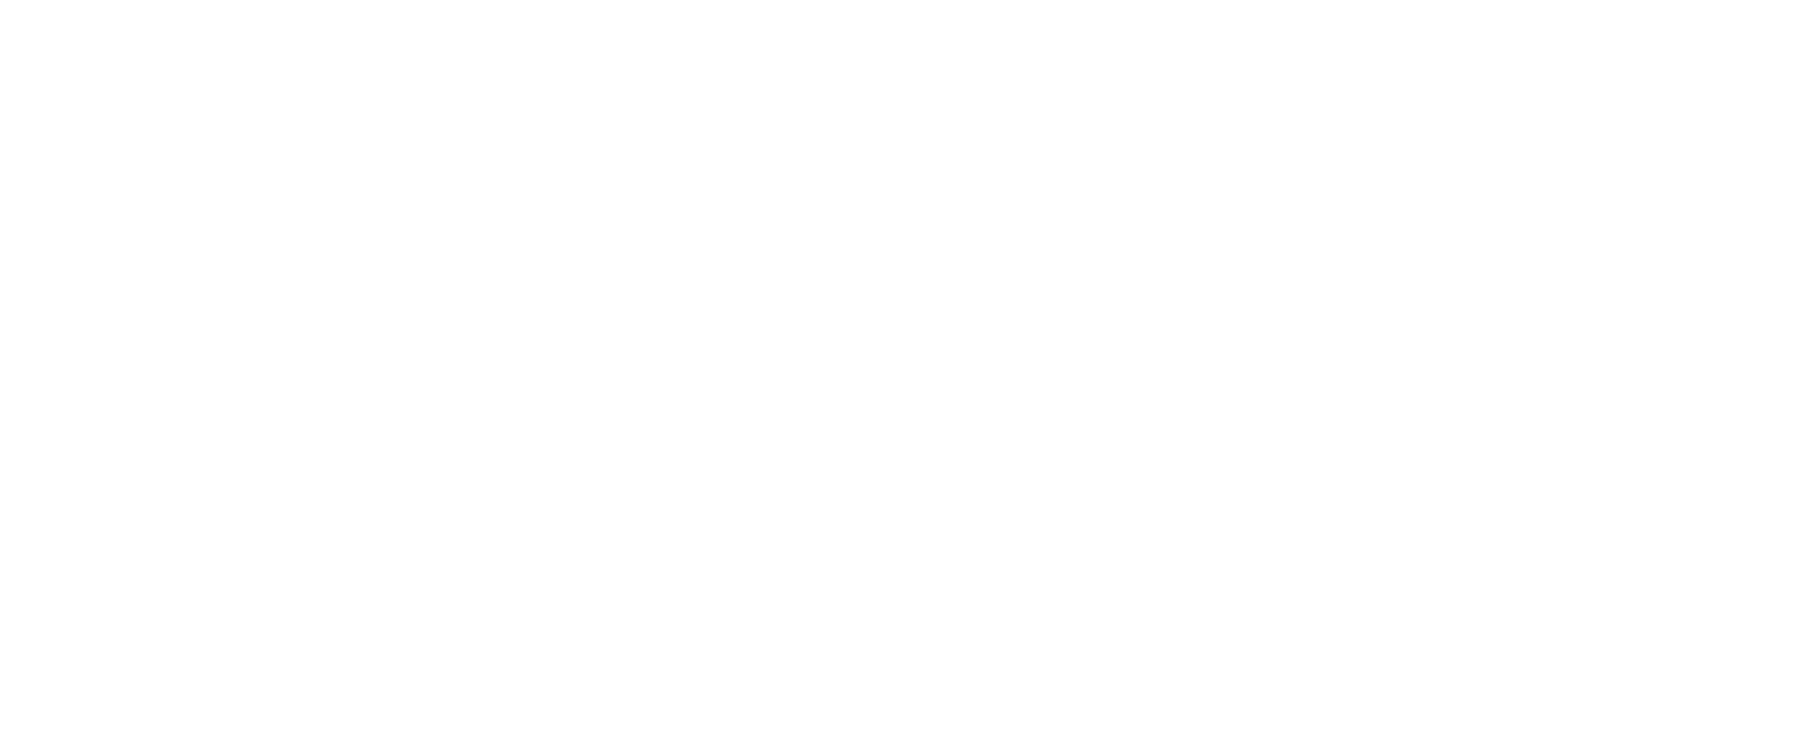 ELEV8 EVENT